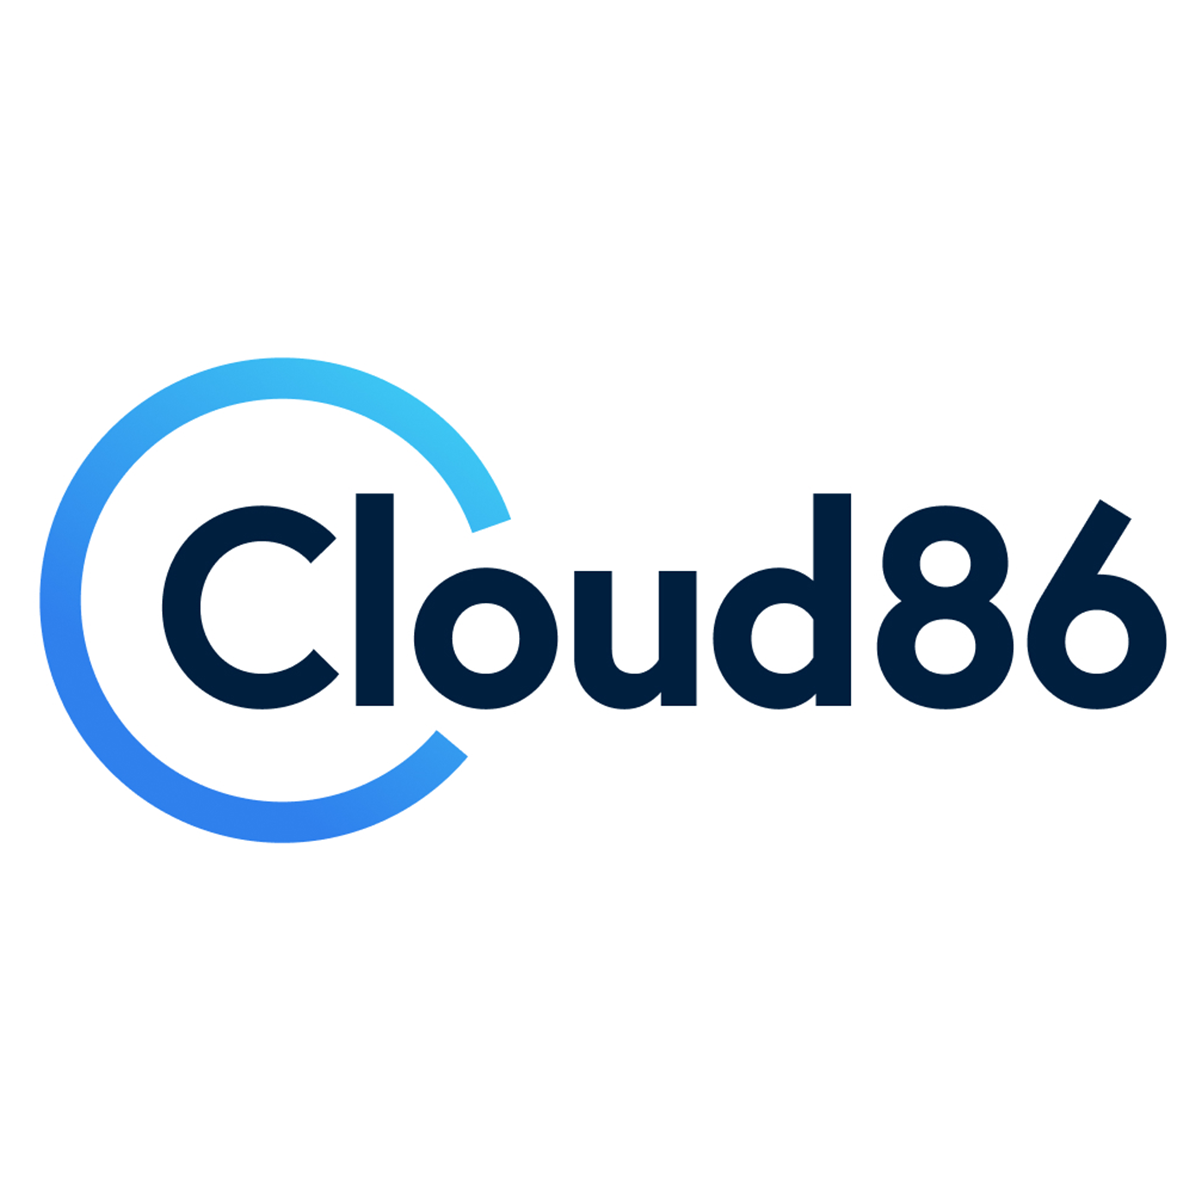 Cloud86_Logo_google_1200x1200px